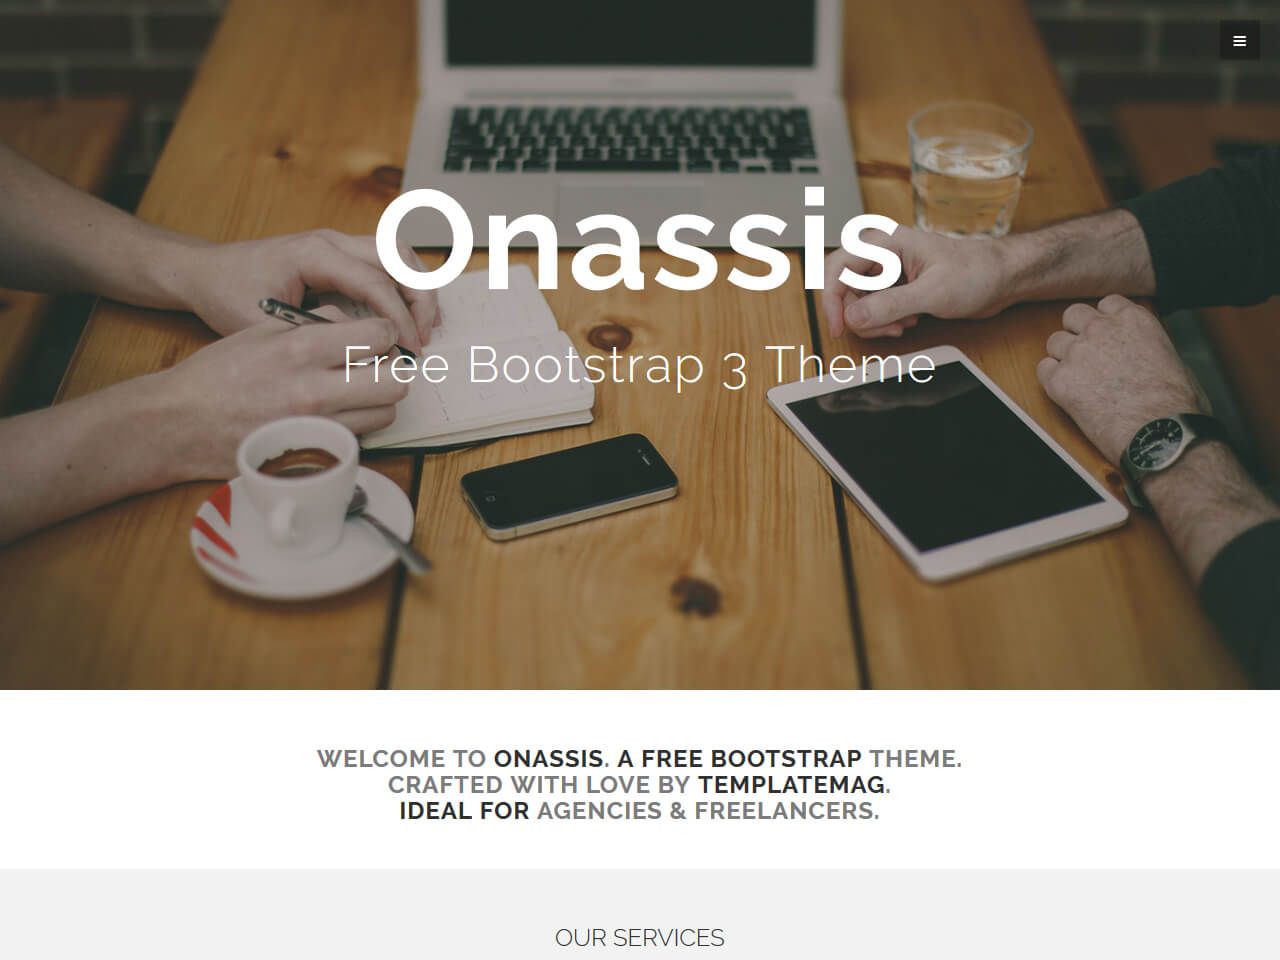 Onassis-适用于自由职业者、代理商